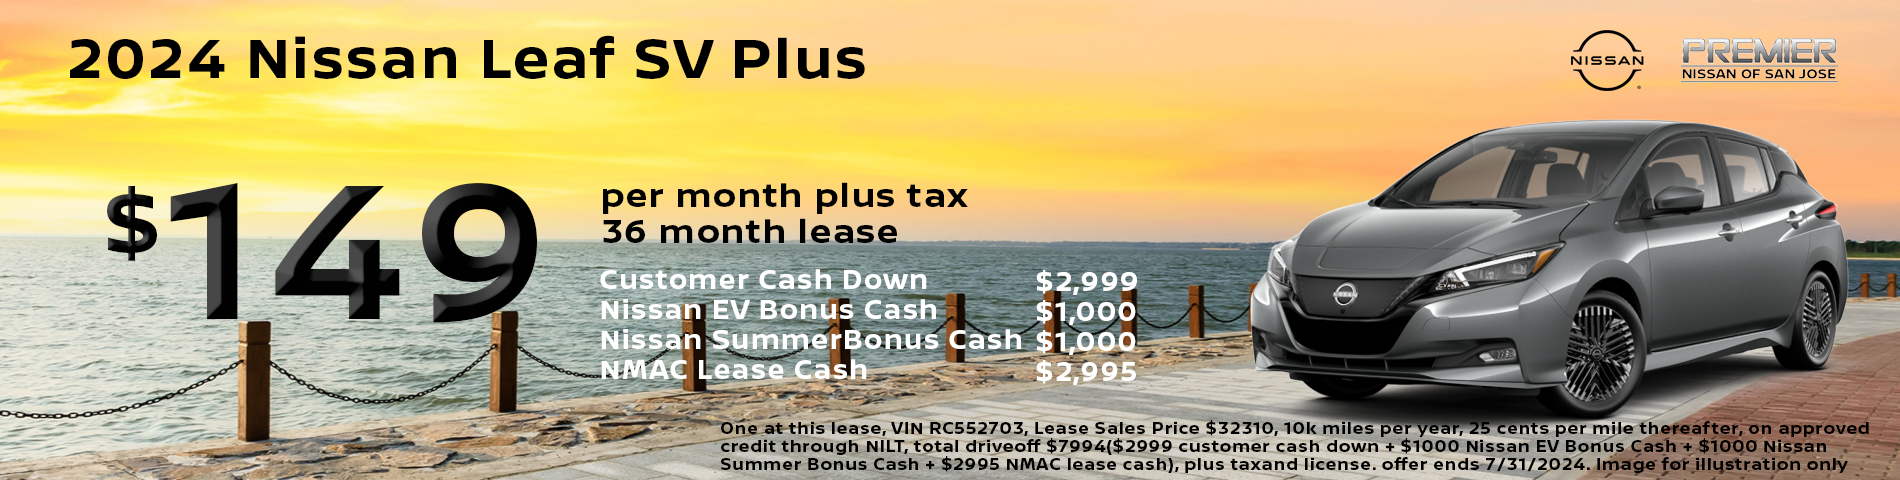 2024 Nissan Leaf SV Plus for $149 per month